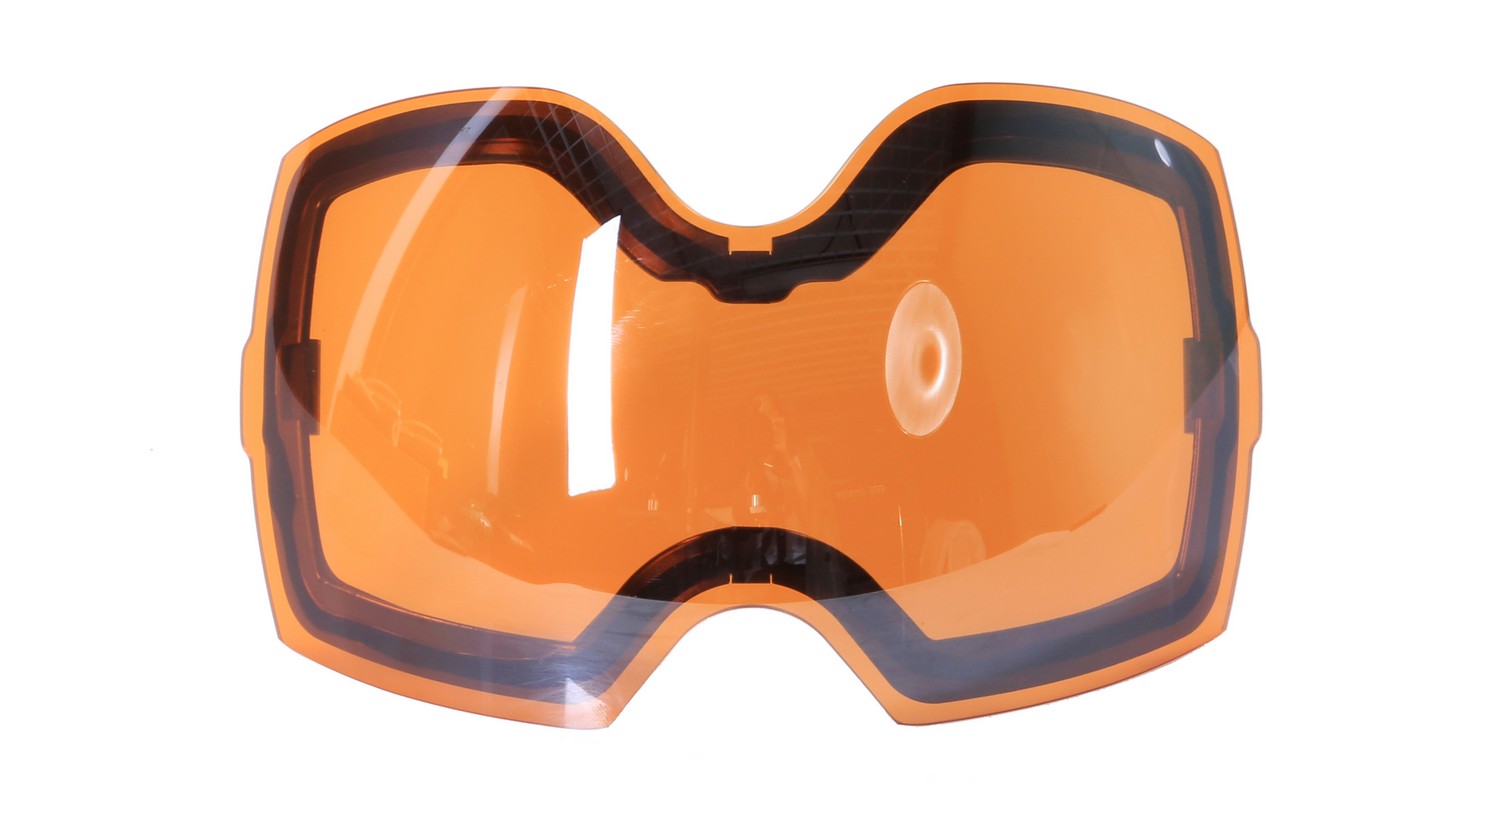 vymenitelne nahradne farebné sklo na lyziarske okuliare - oranzove